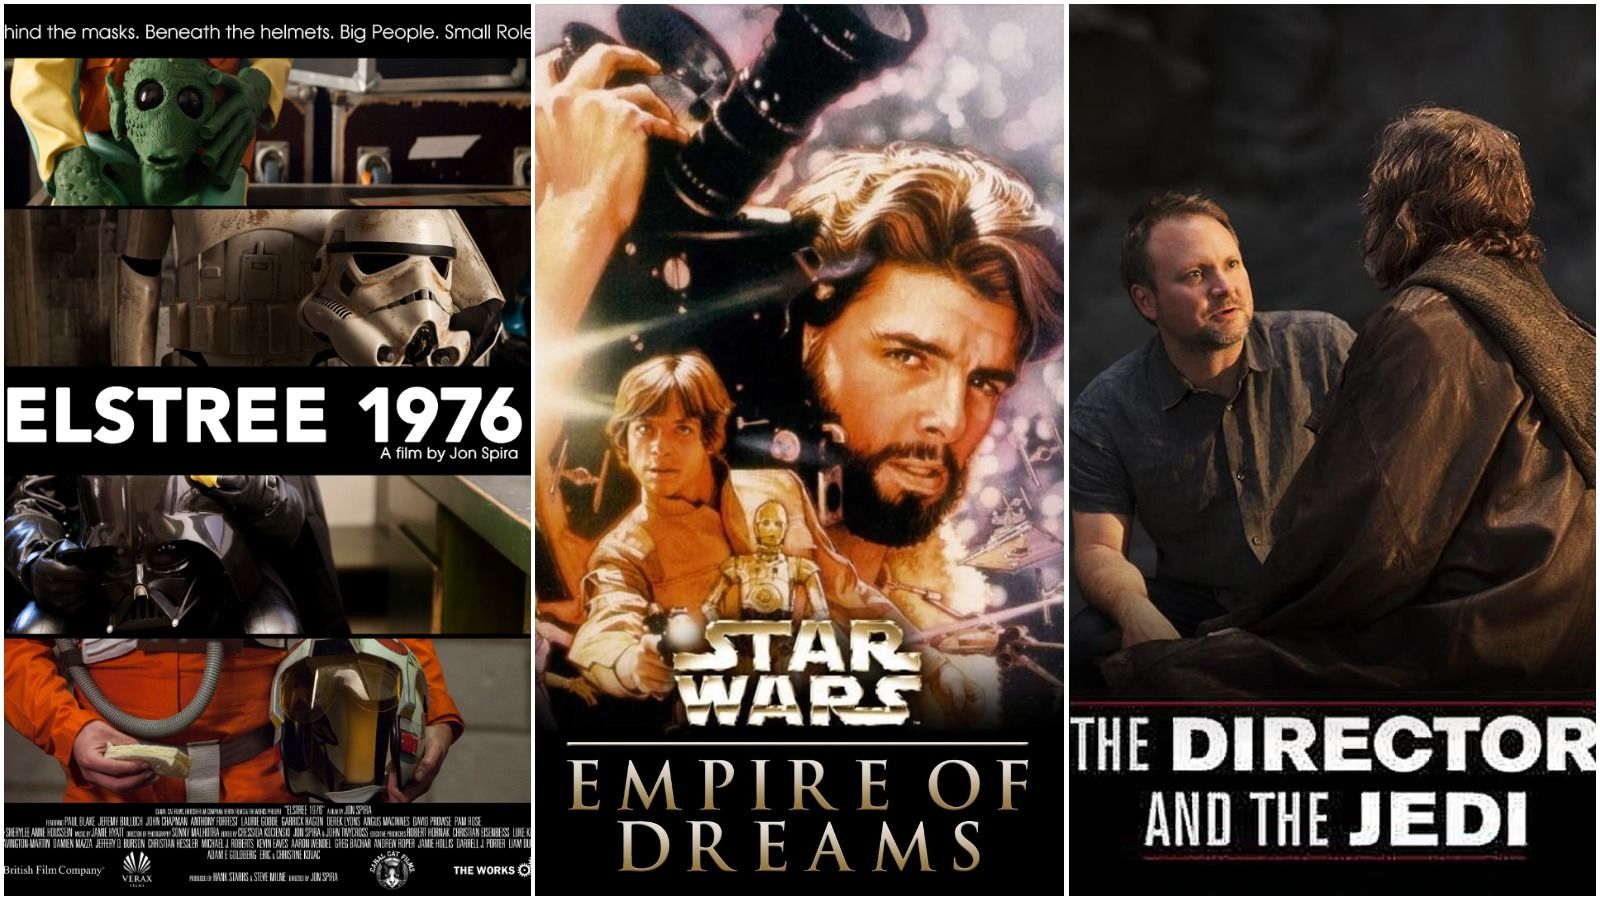 Star Wars Documentaries